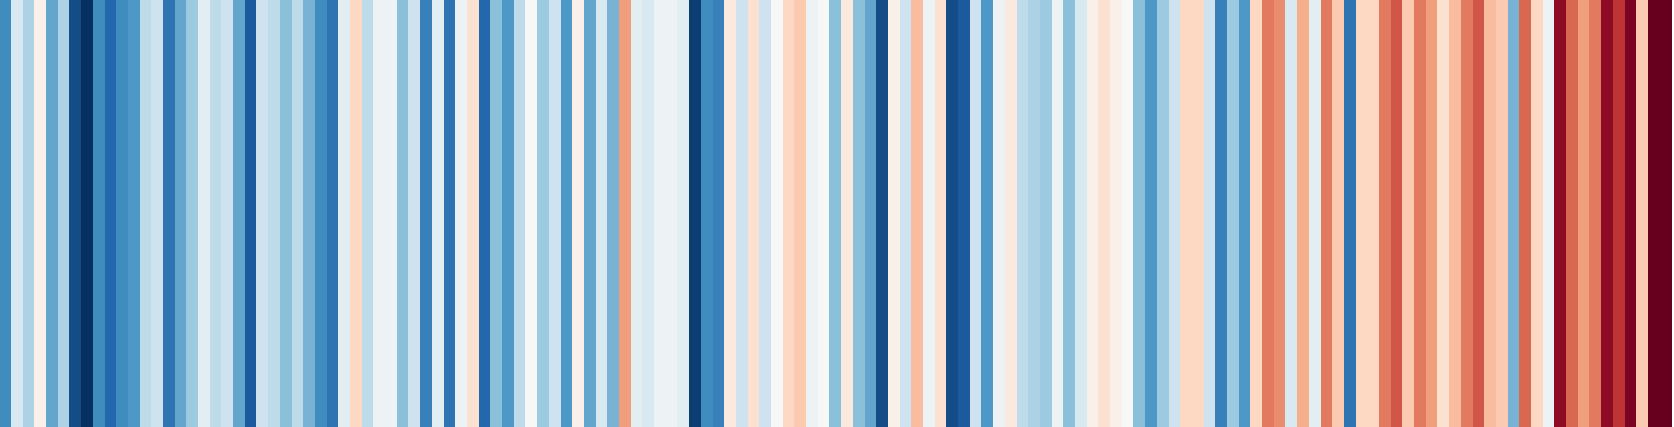 Download Diagramm Warming Stripes NRW